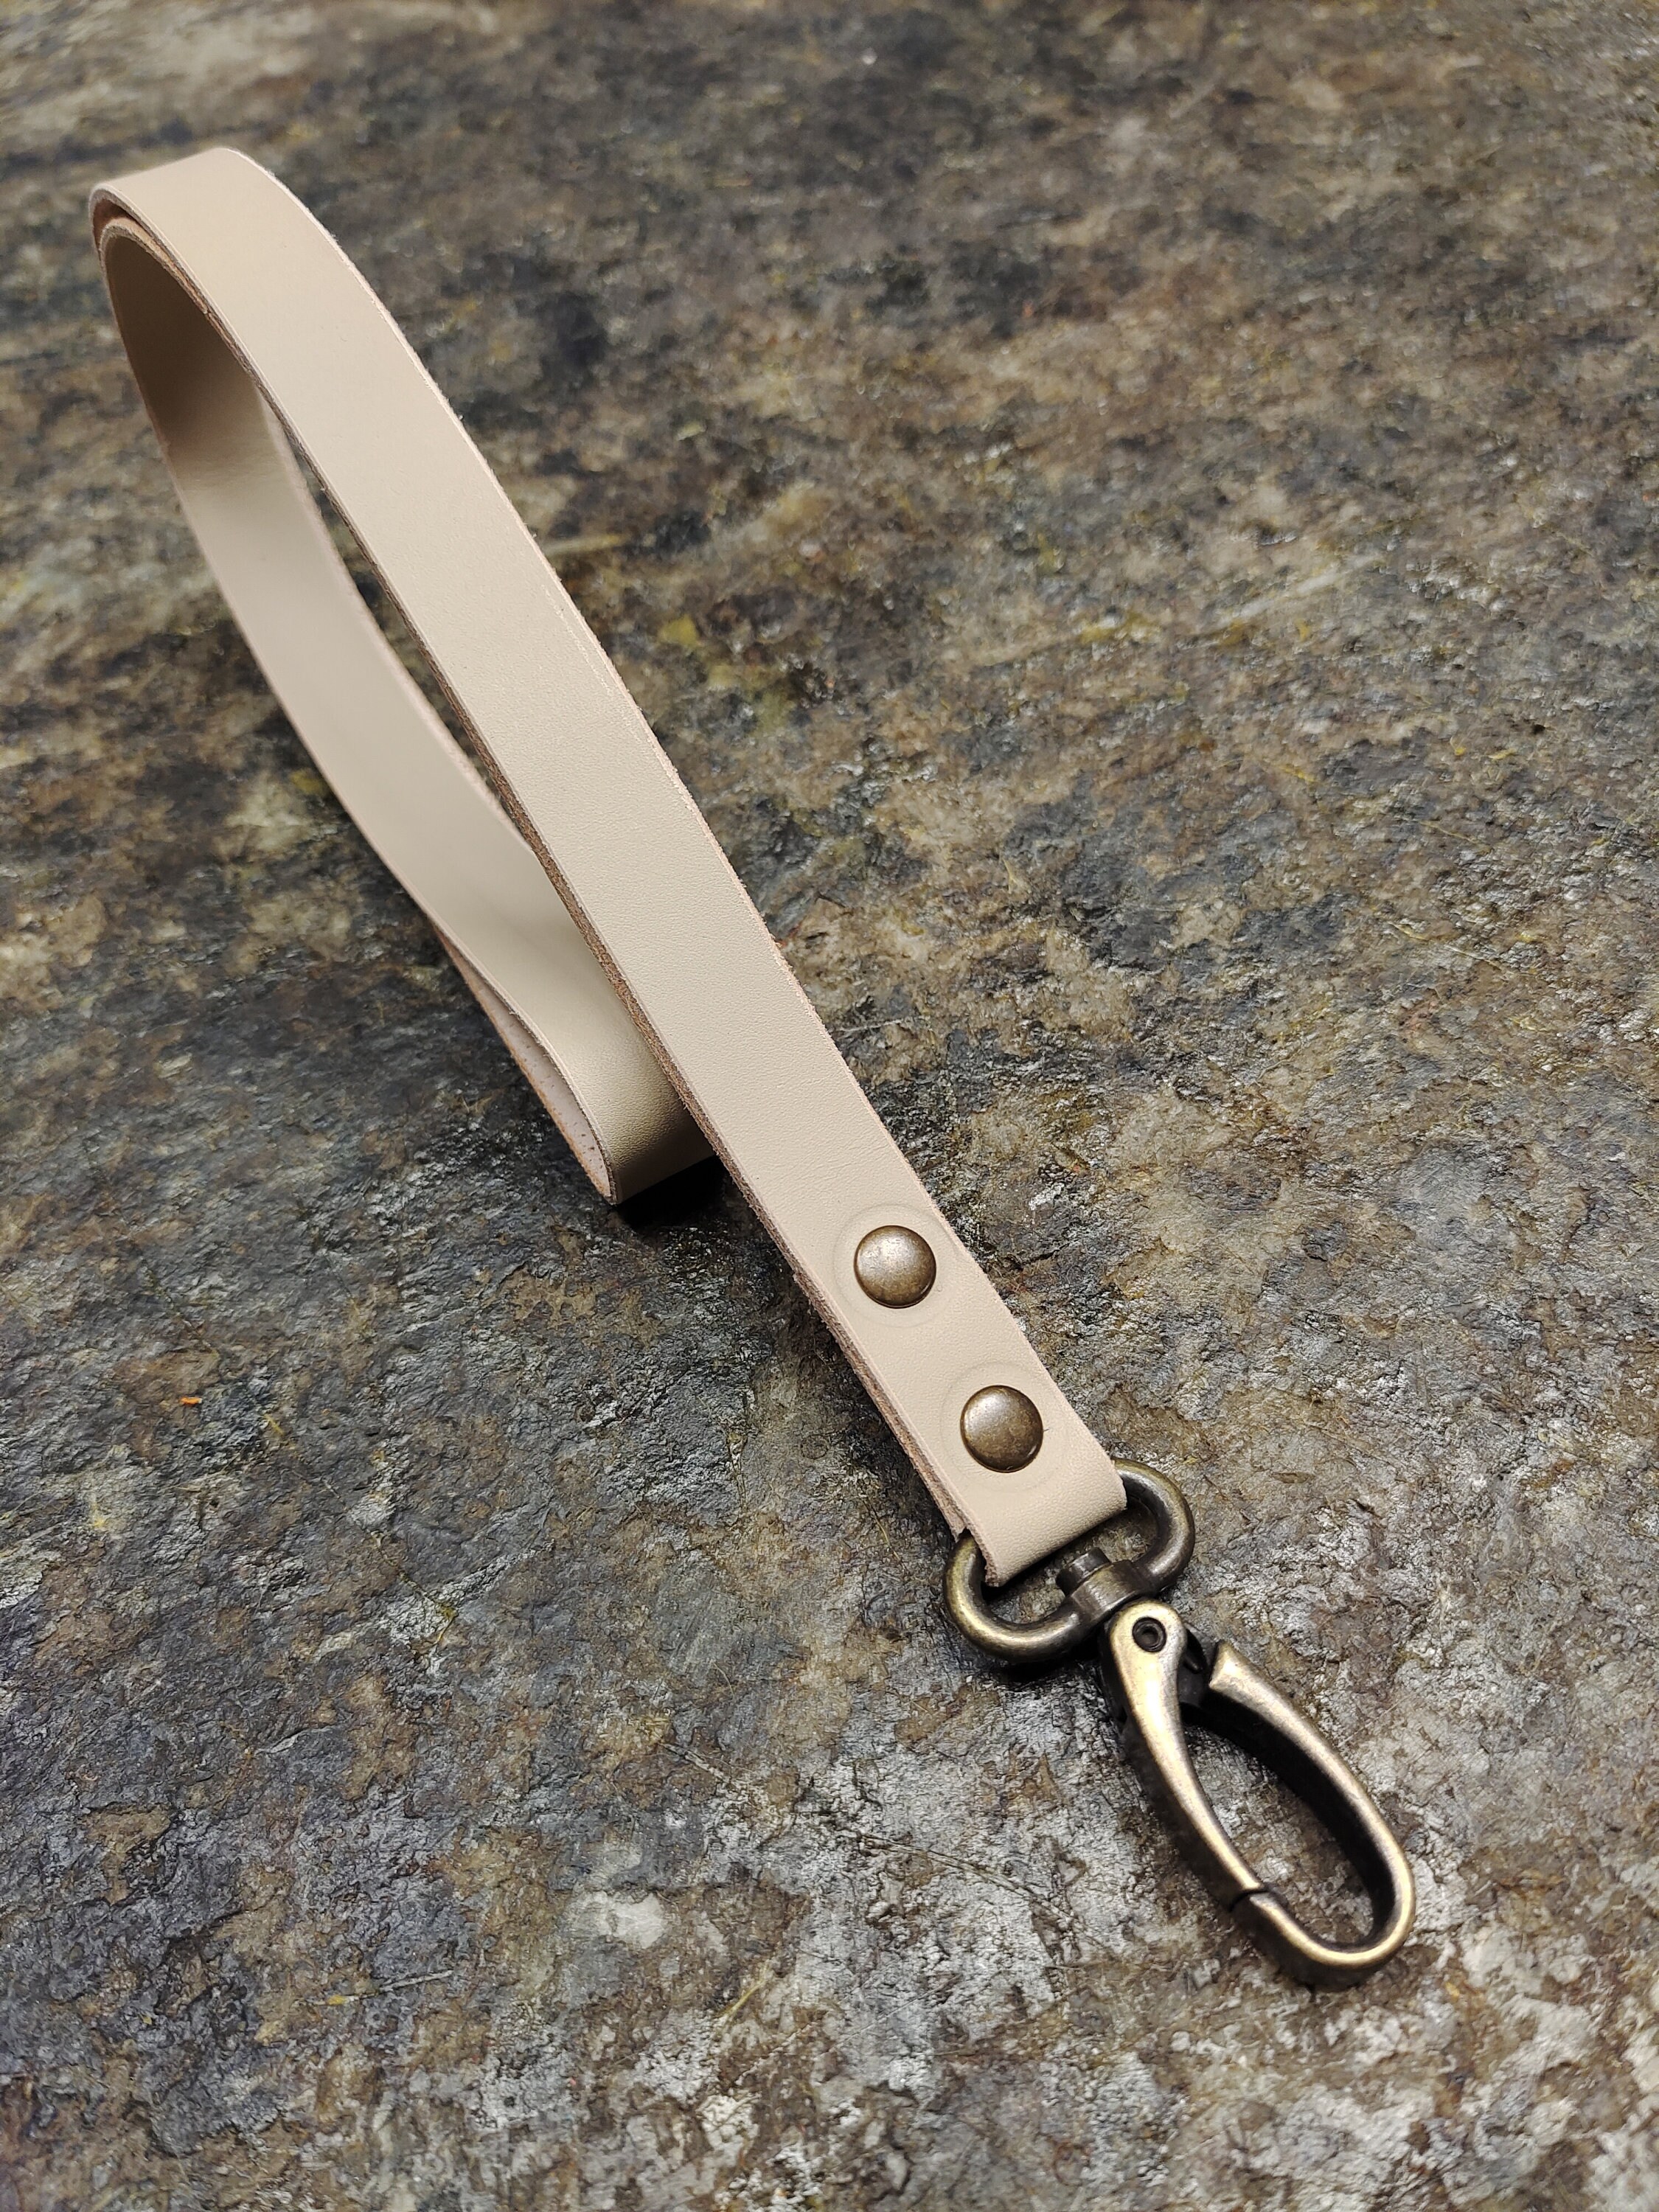 Neck Lanyard Adjustable, Leather Lanyard Key Strap With Metal Clip